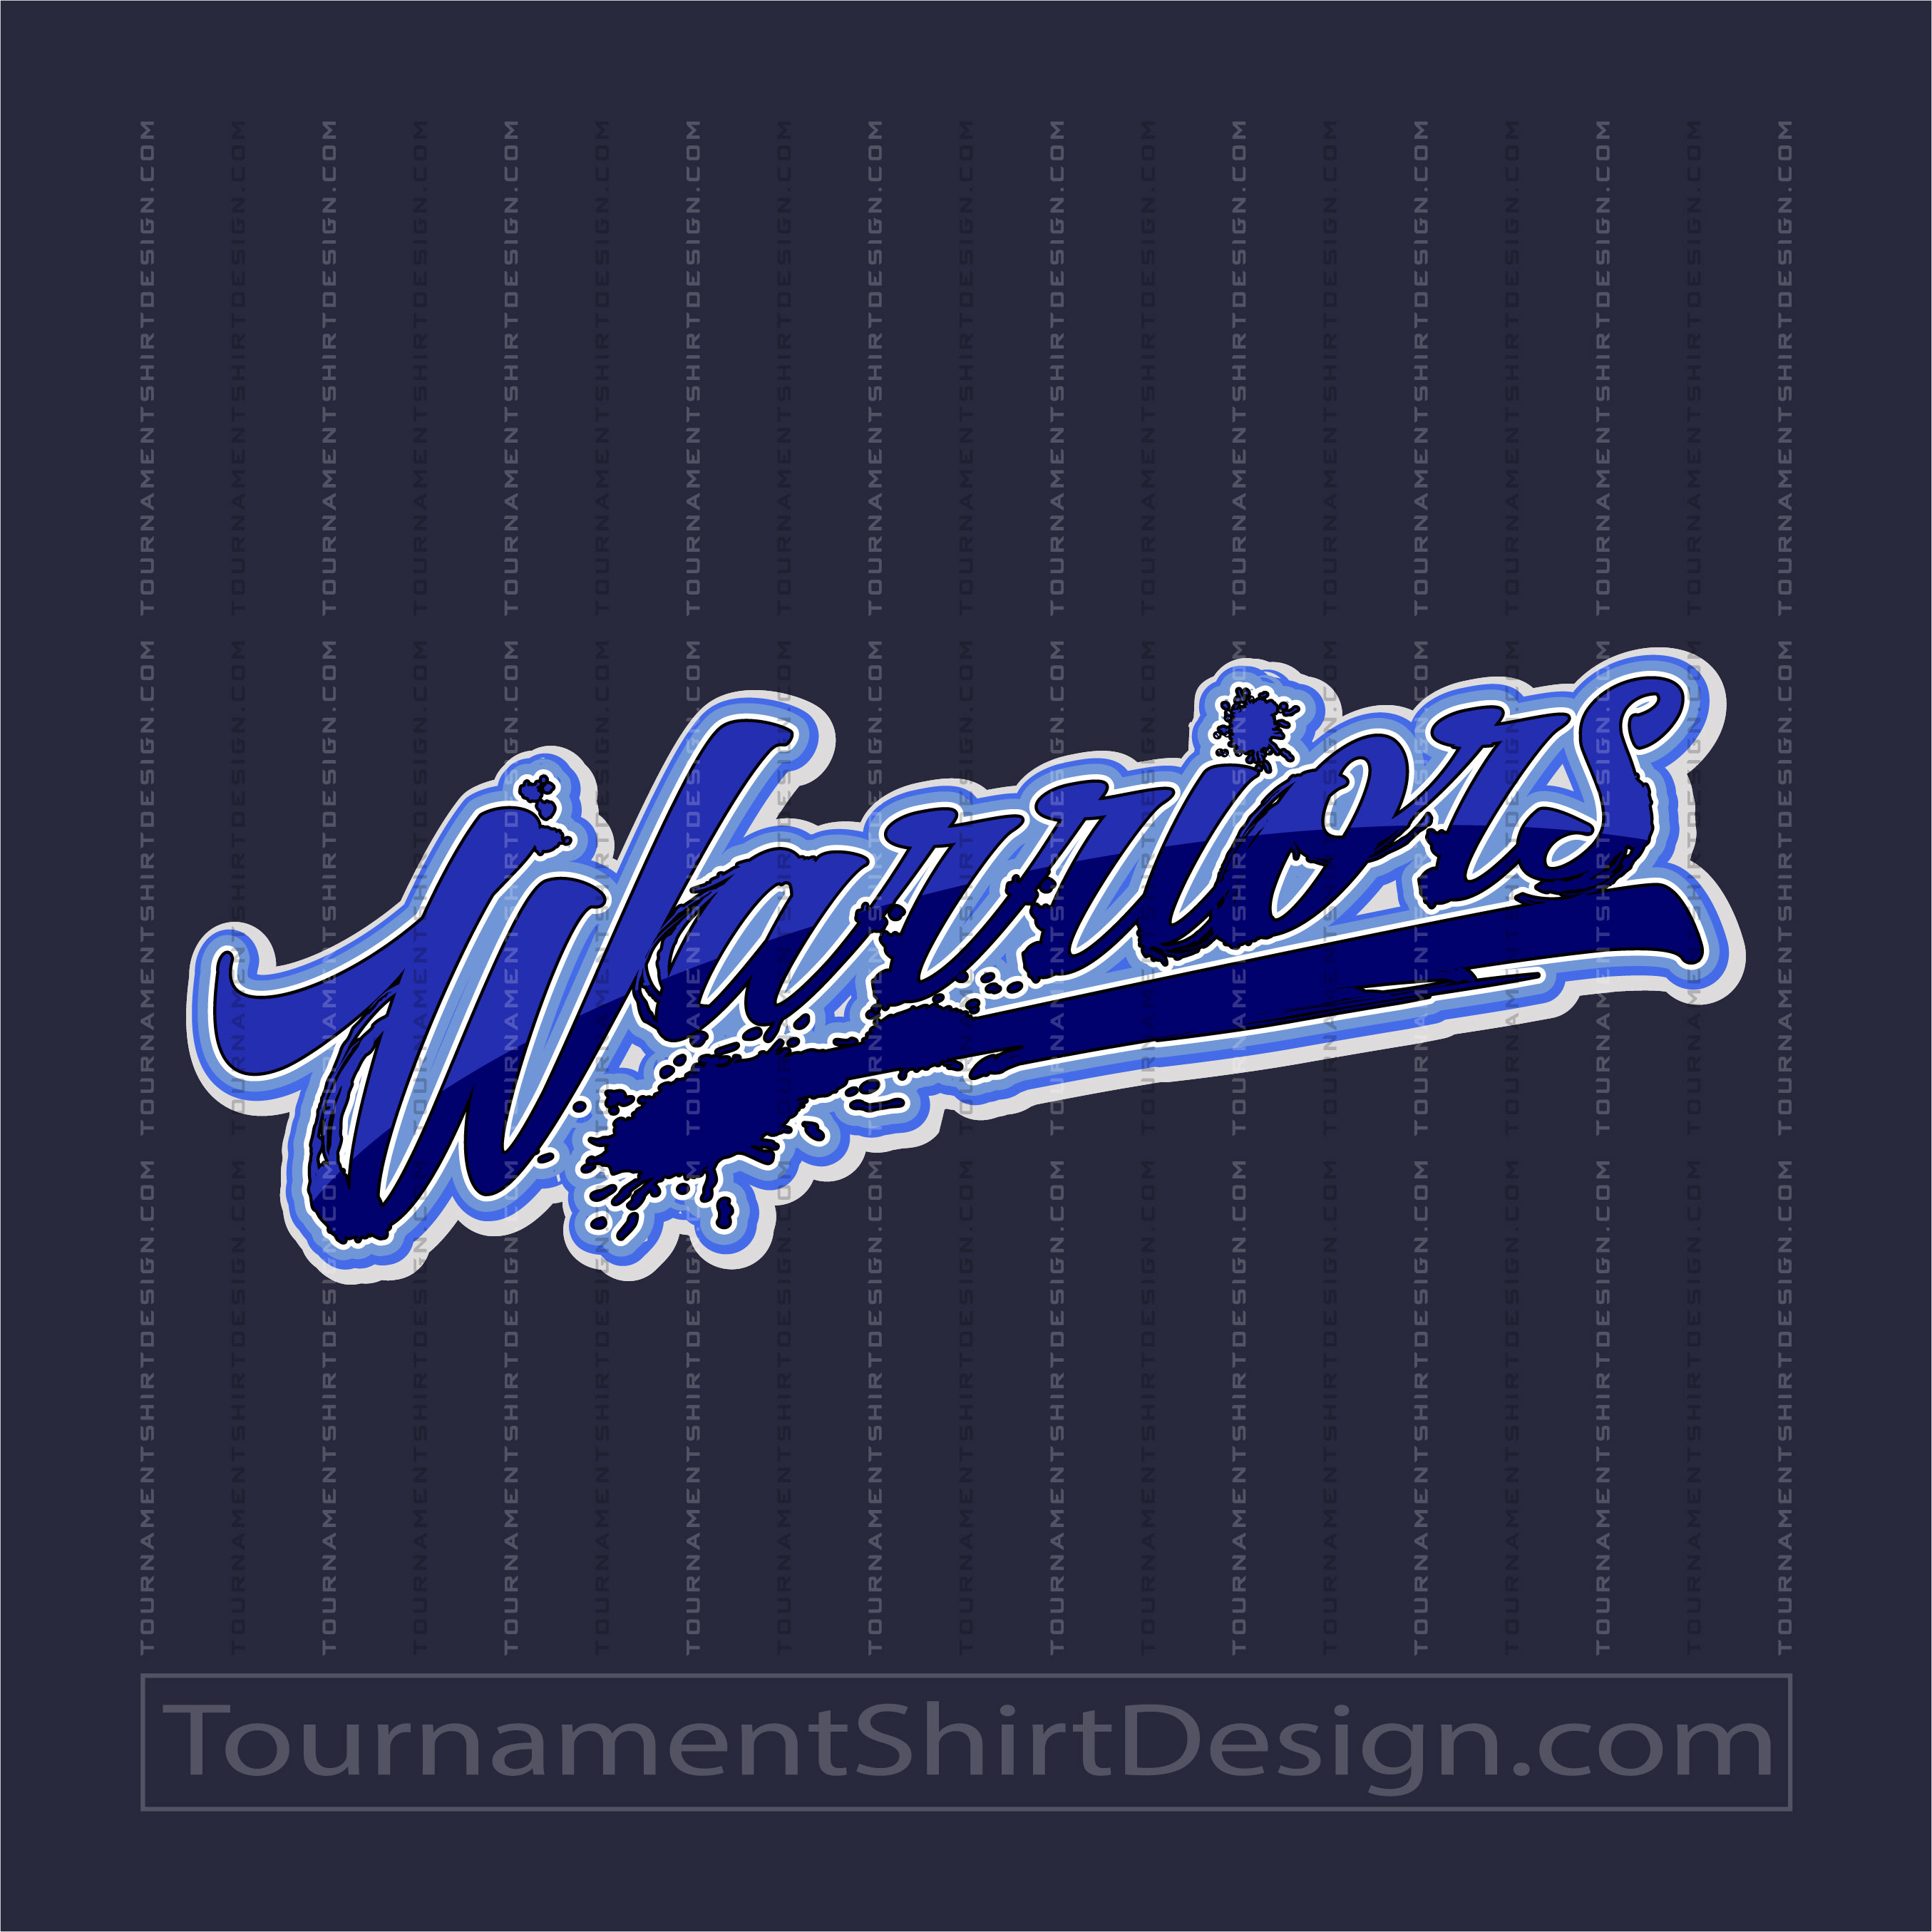 Warriors Team Logo